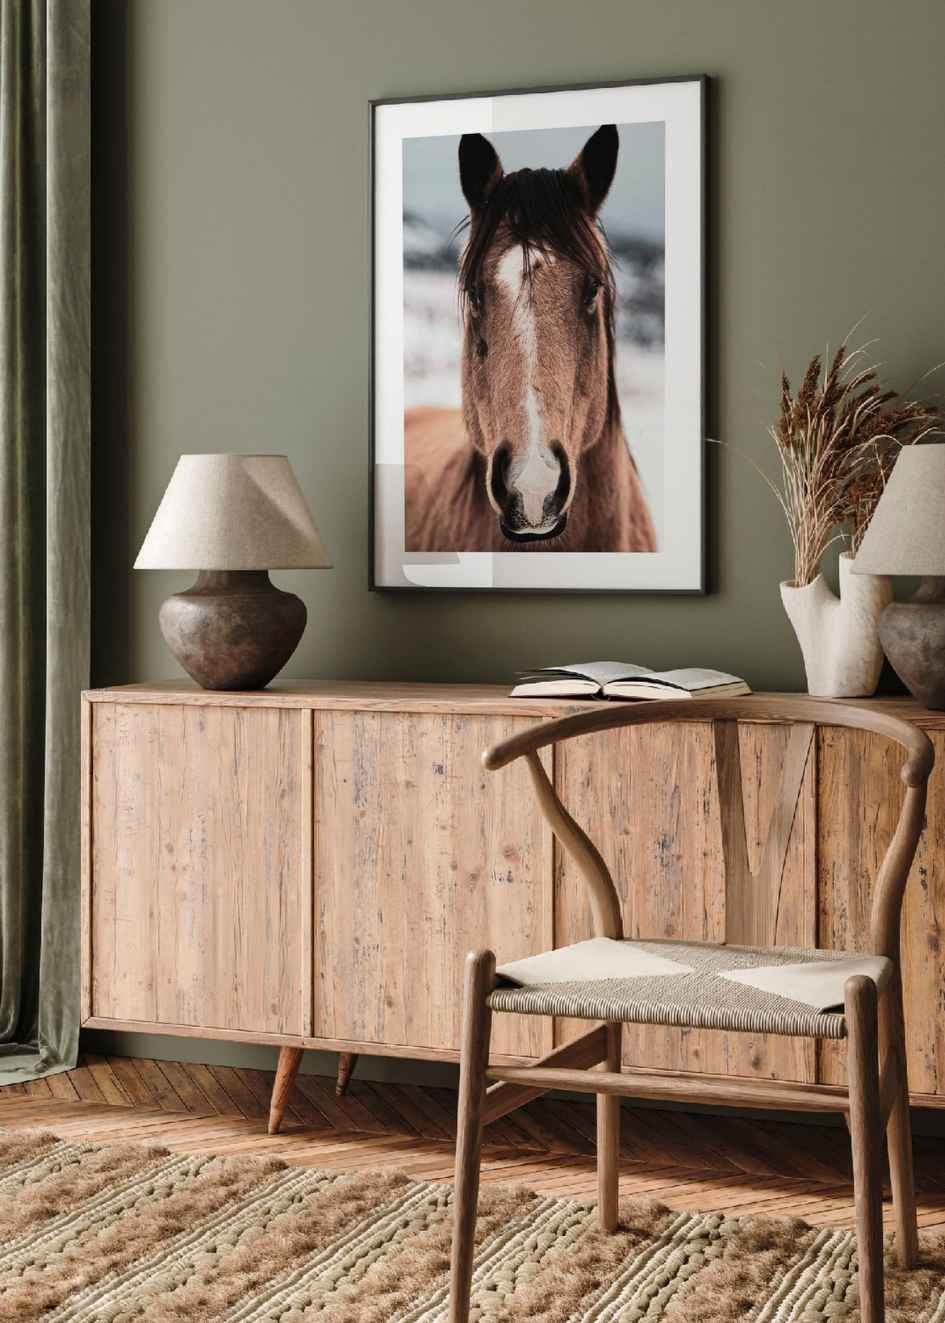 Plakat Koń